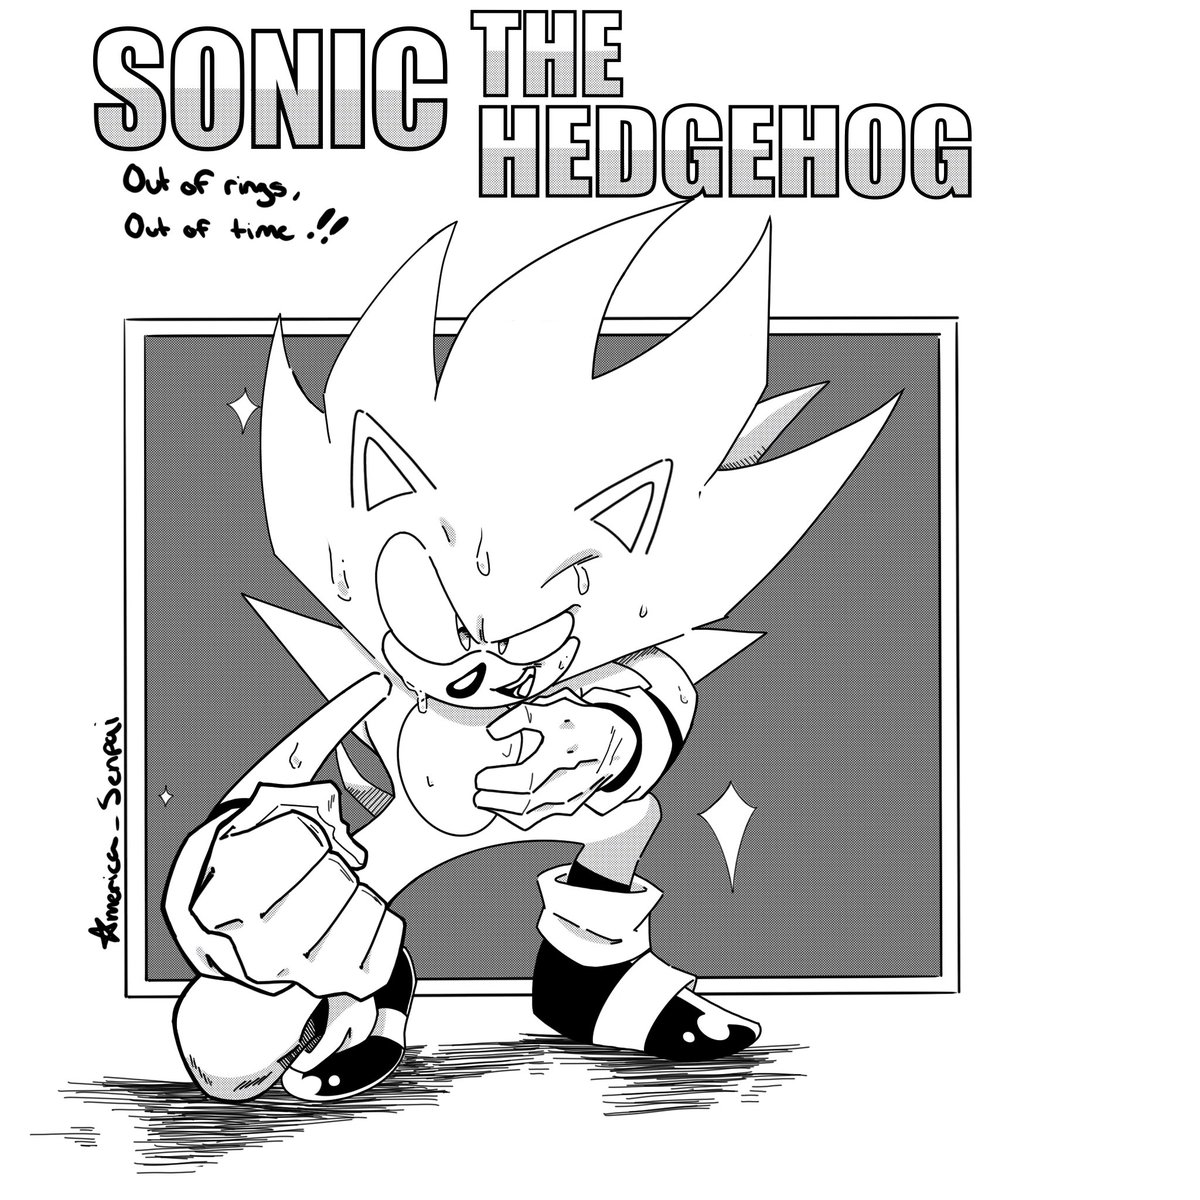 Next time on Sonic The Hedgehog

#SonicTheHedgehog 
#Sonic 